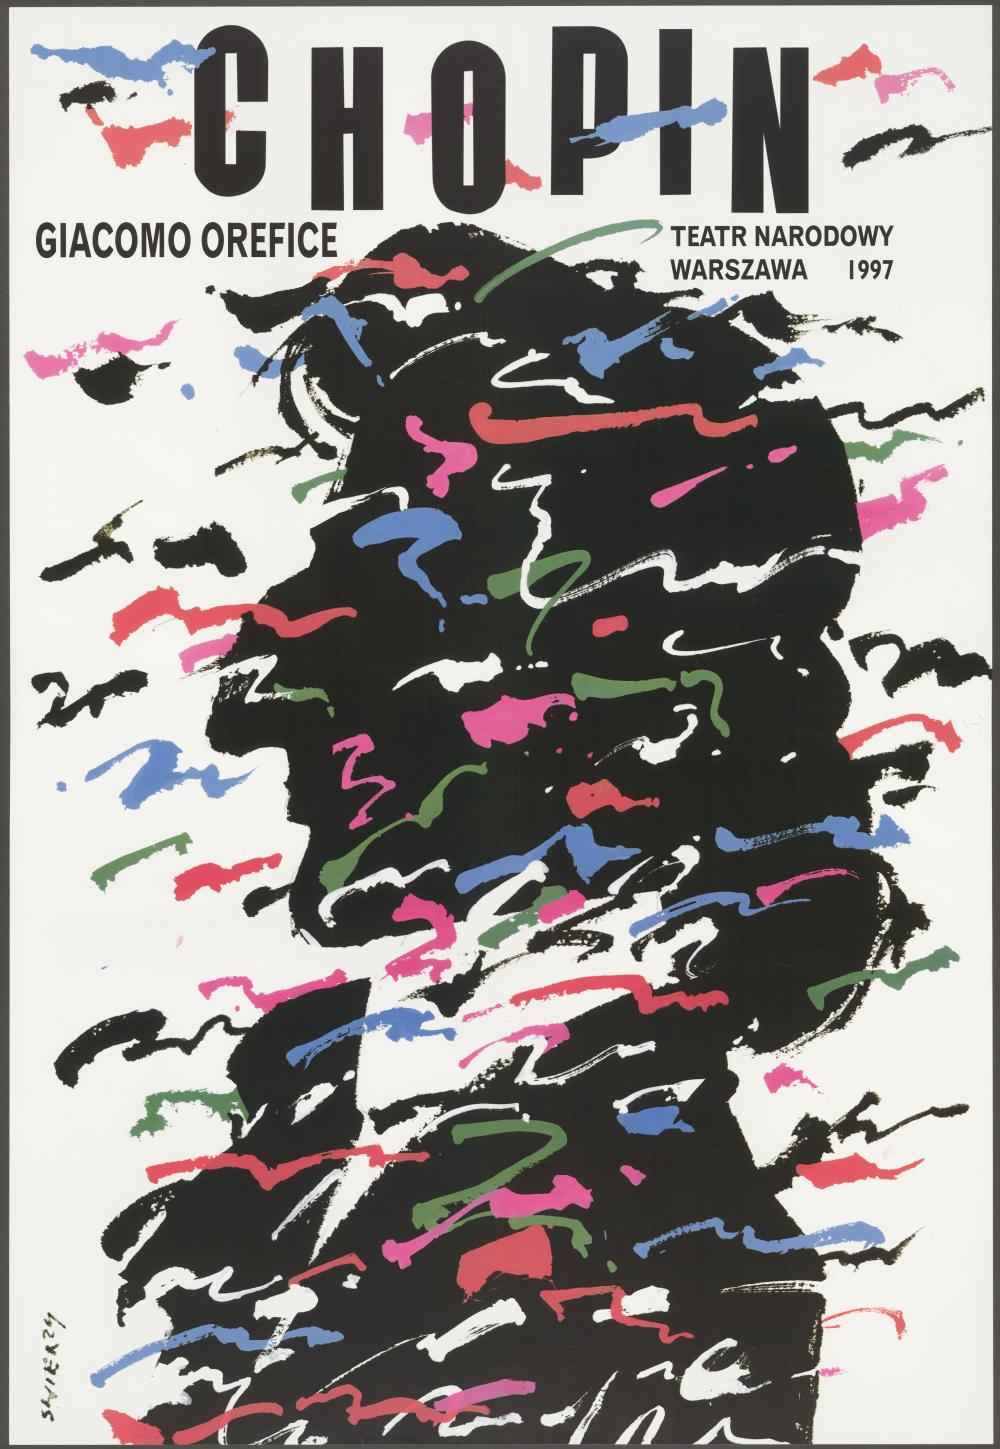 Plakat „Chopin” Giacomo Orefice 17-05-1997